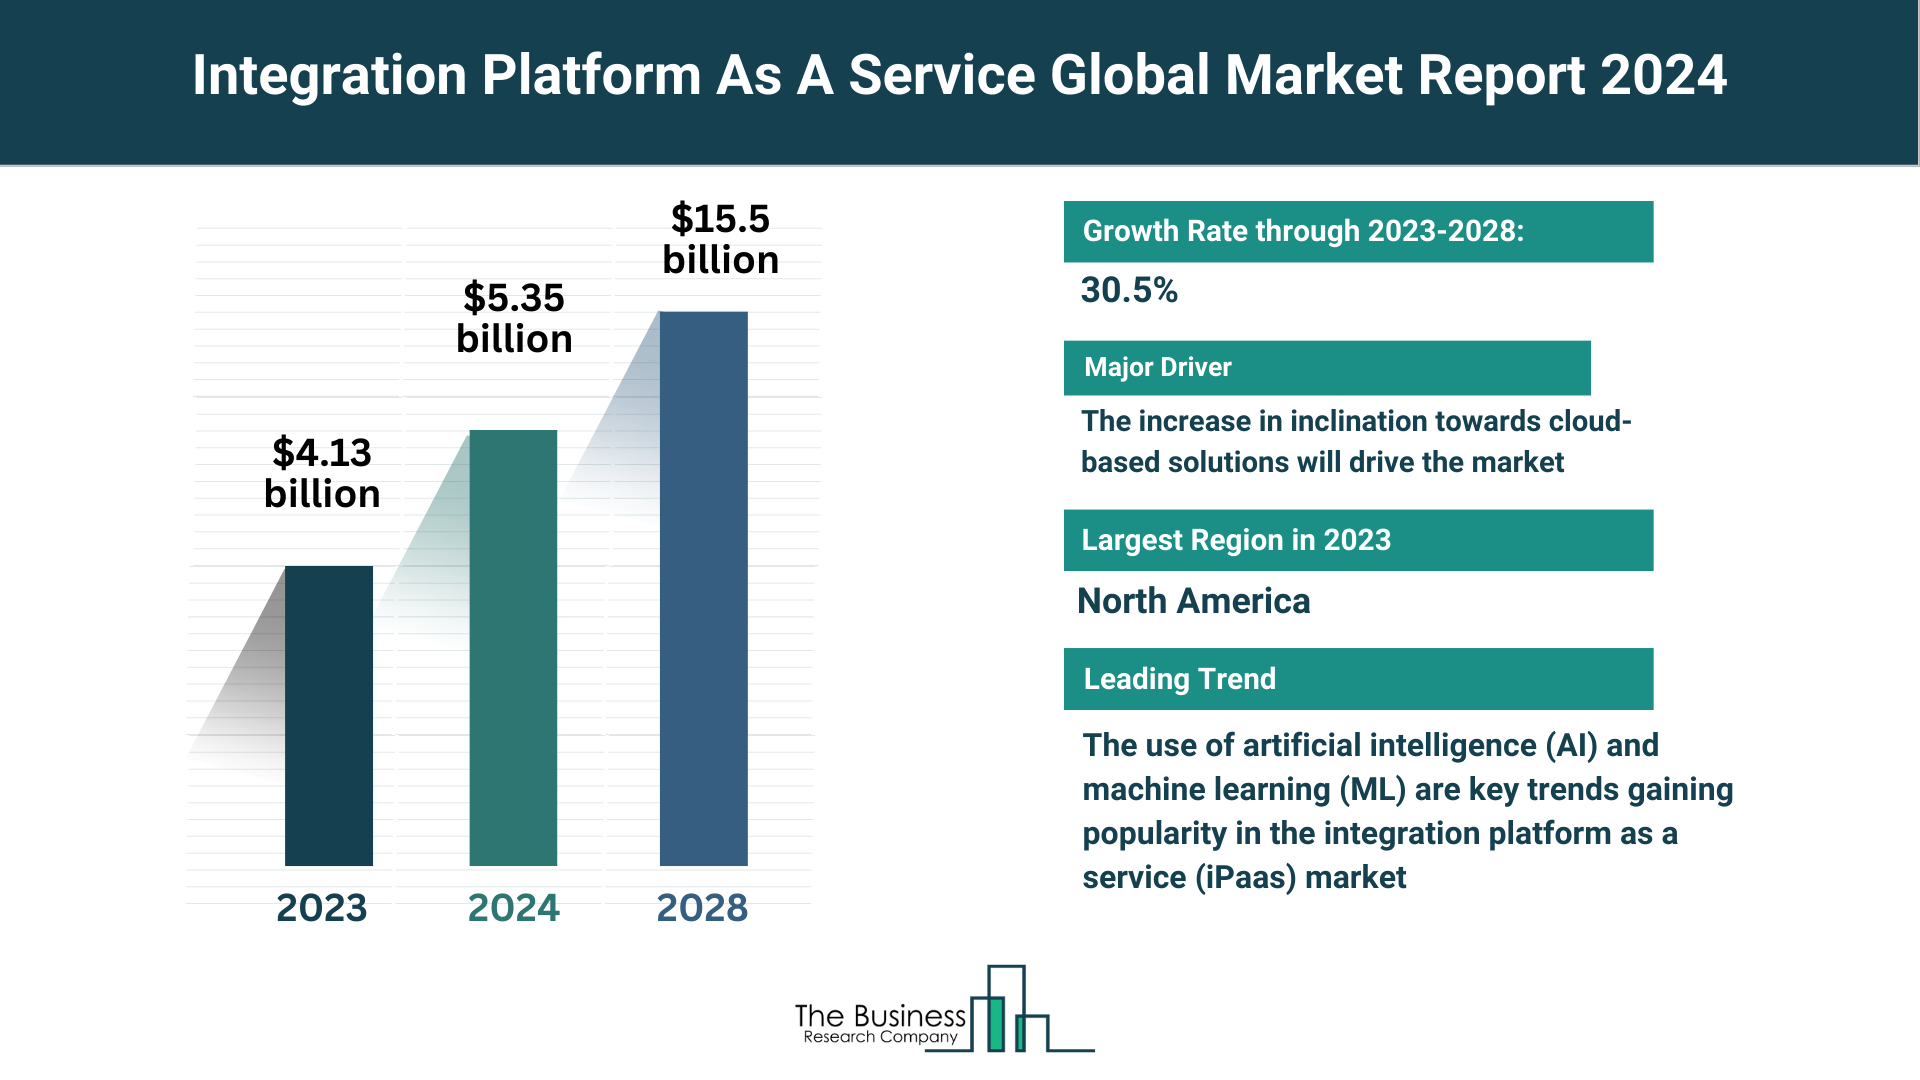 Global Integration Platform As A Service Market